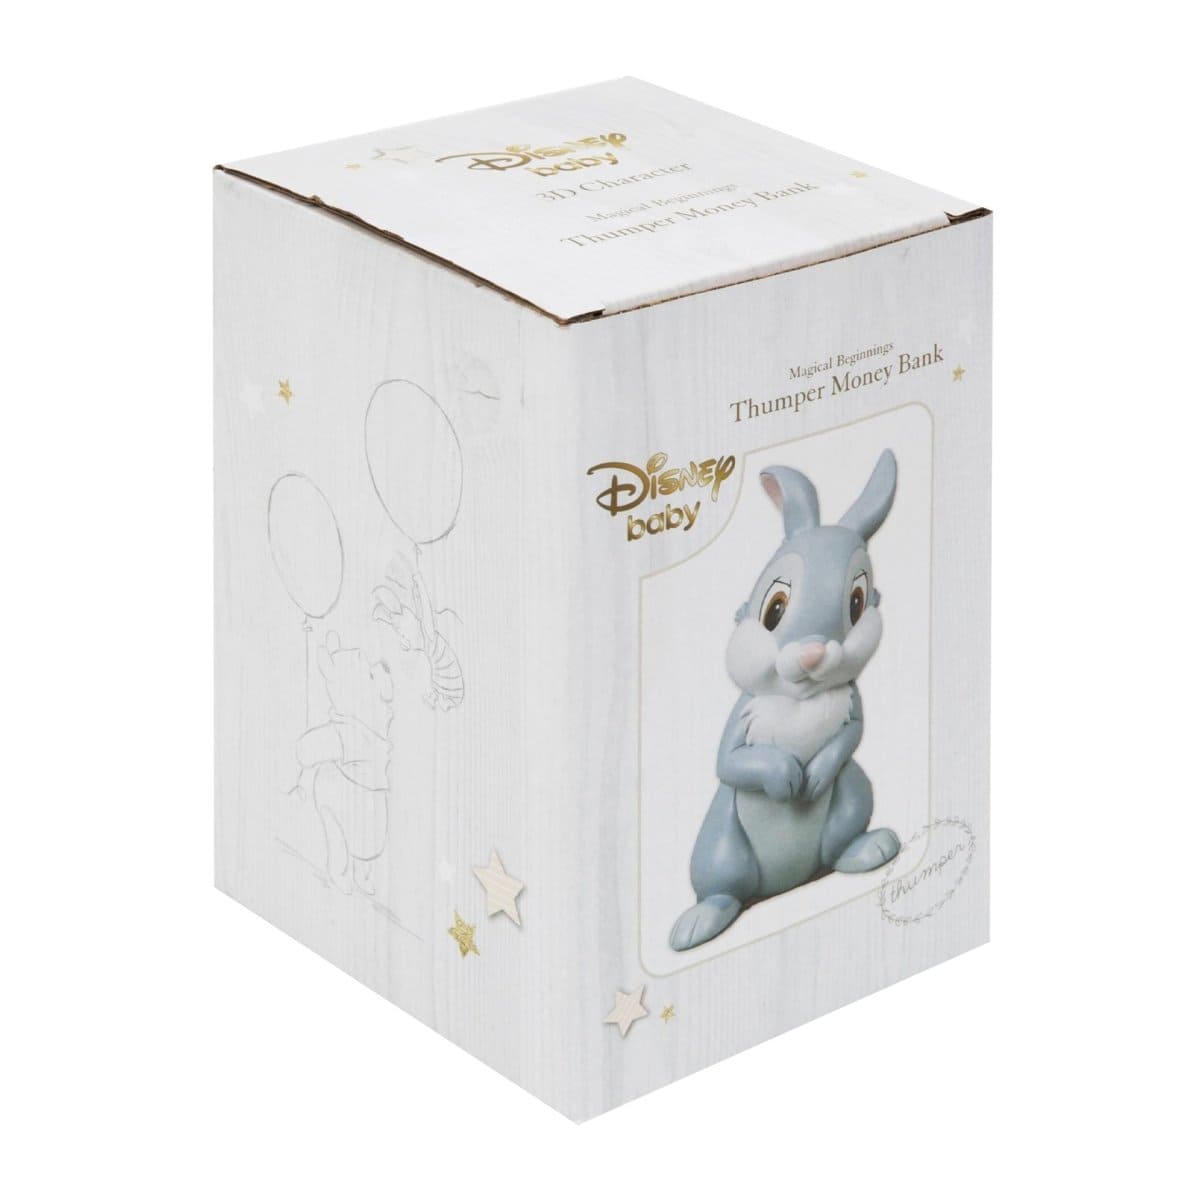 Thumper Money Box by Disney Magical Beginnings - Money Box by Disney